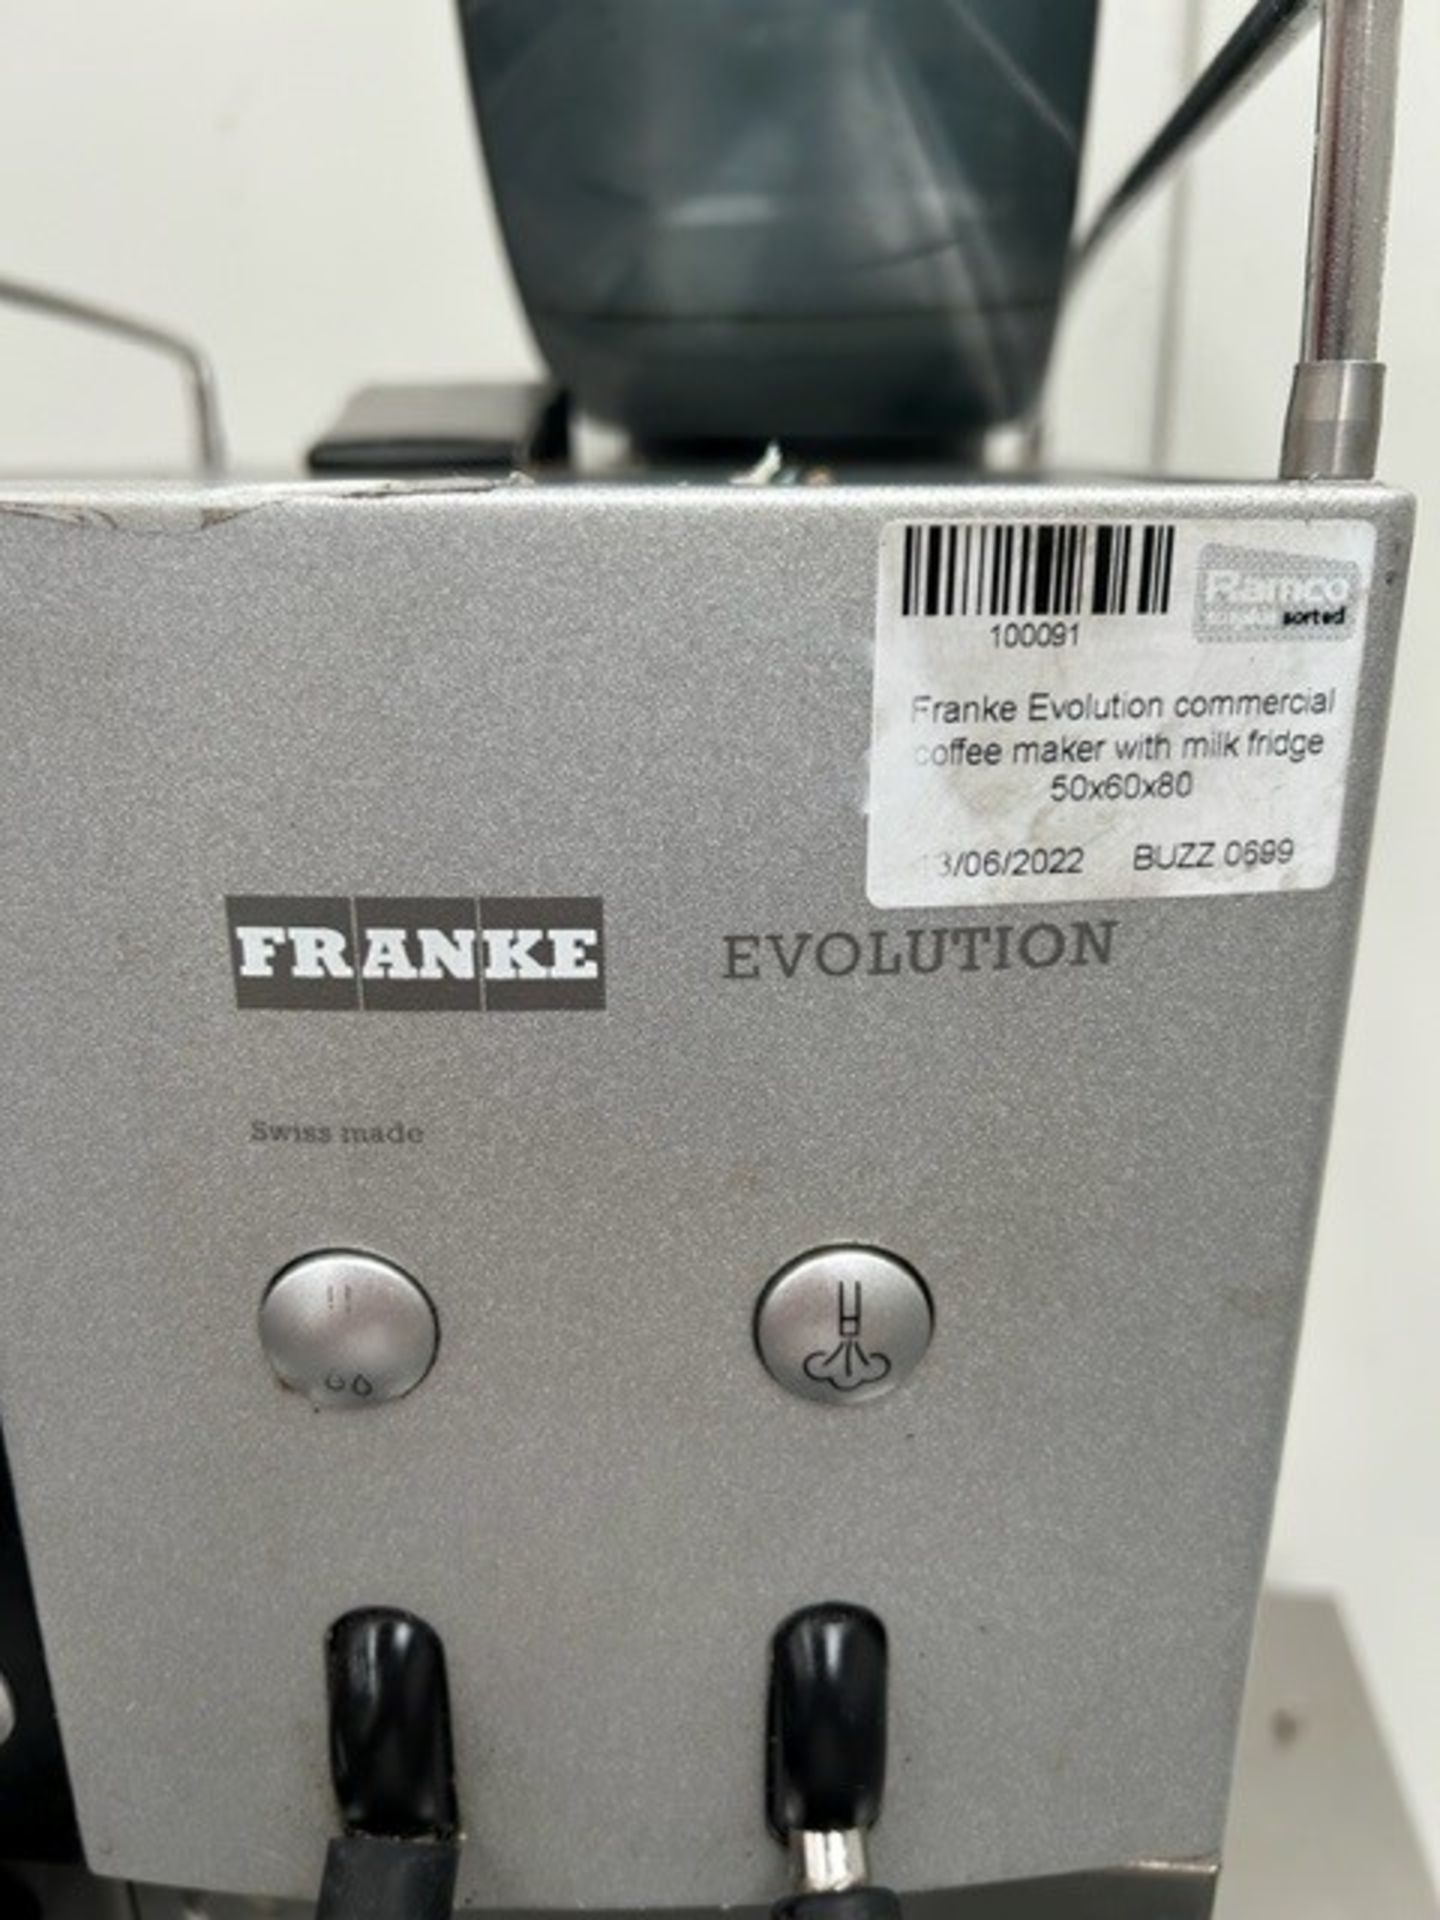 Frankie Coffee Machine - Image 2 of 3